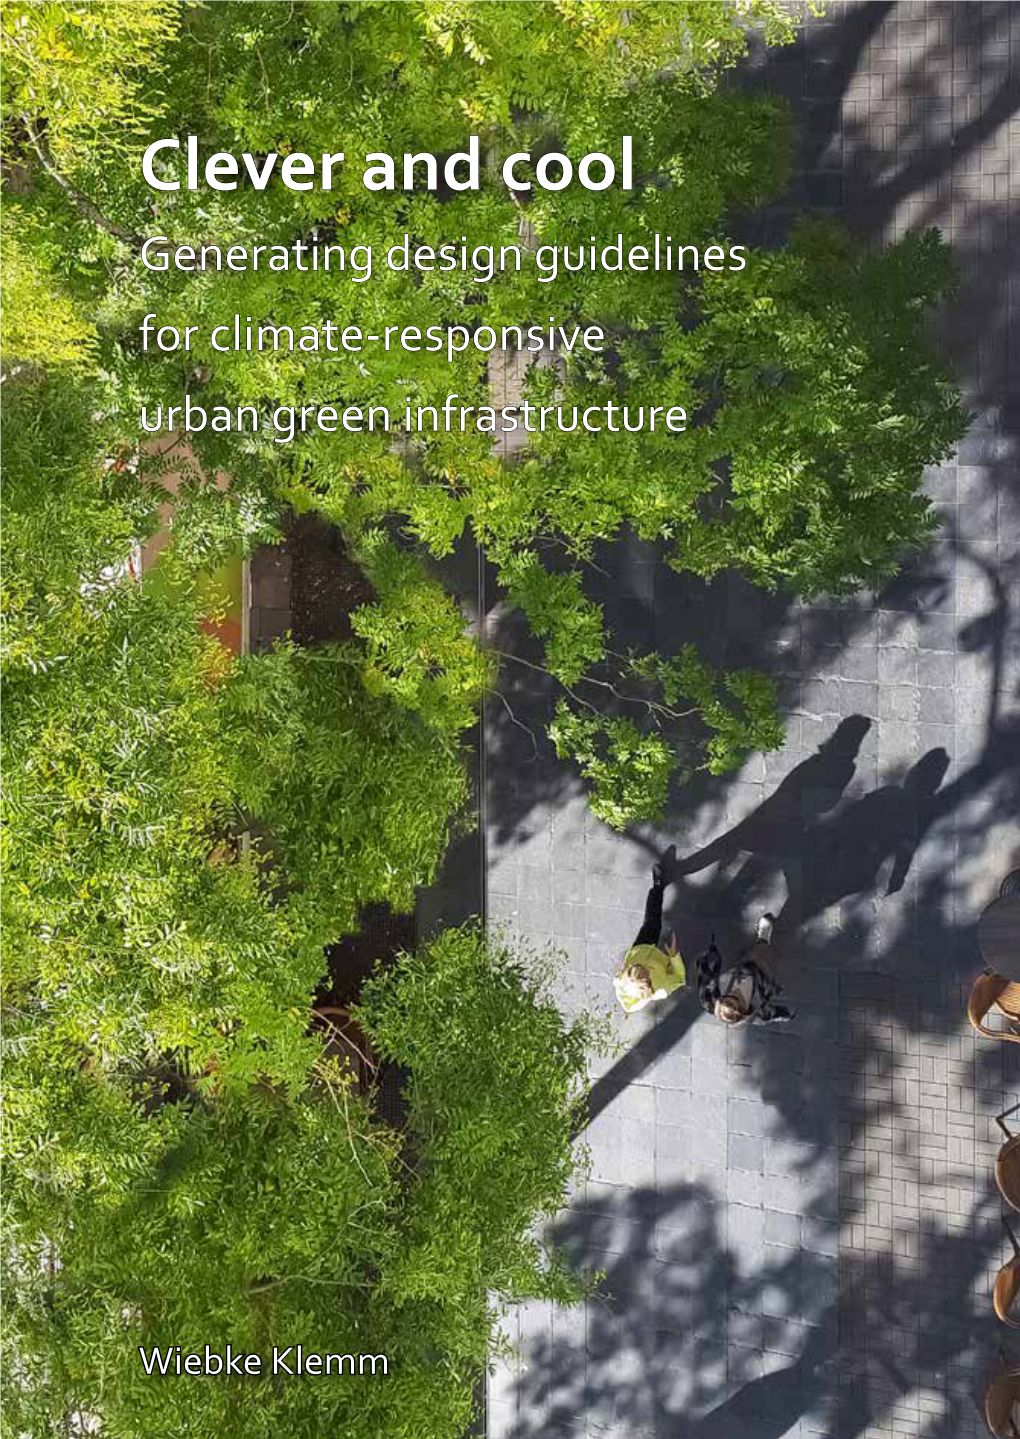 Landscape Architecture Wageningen University & Research